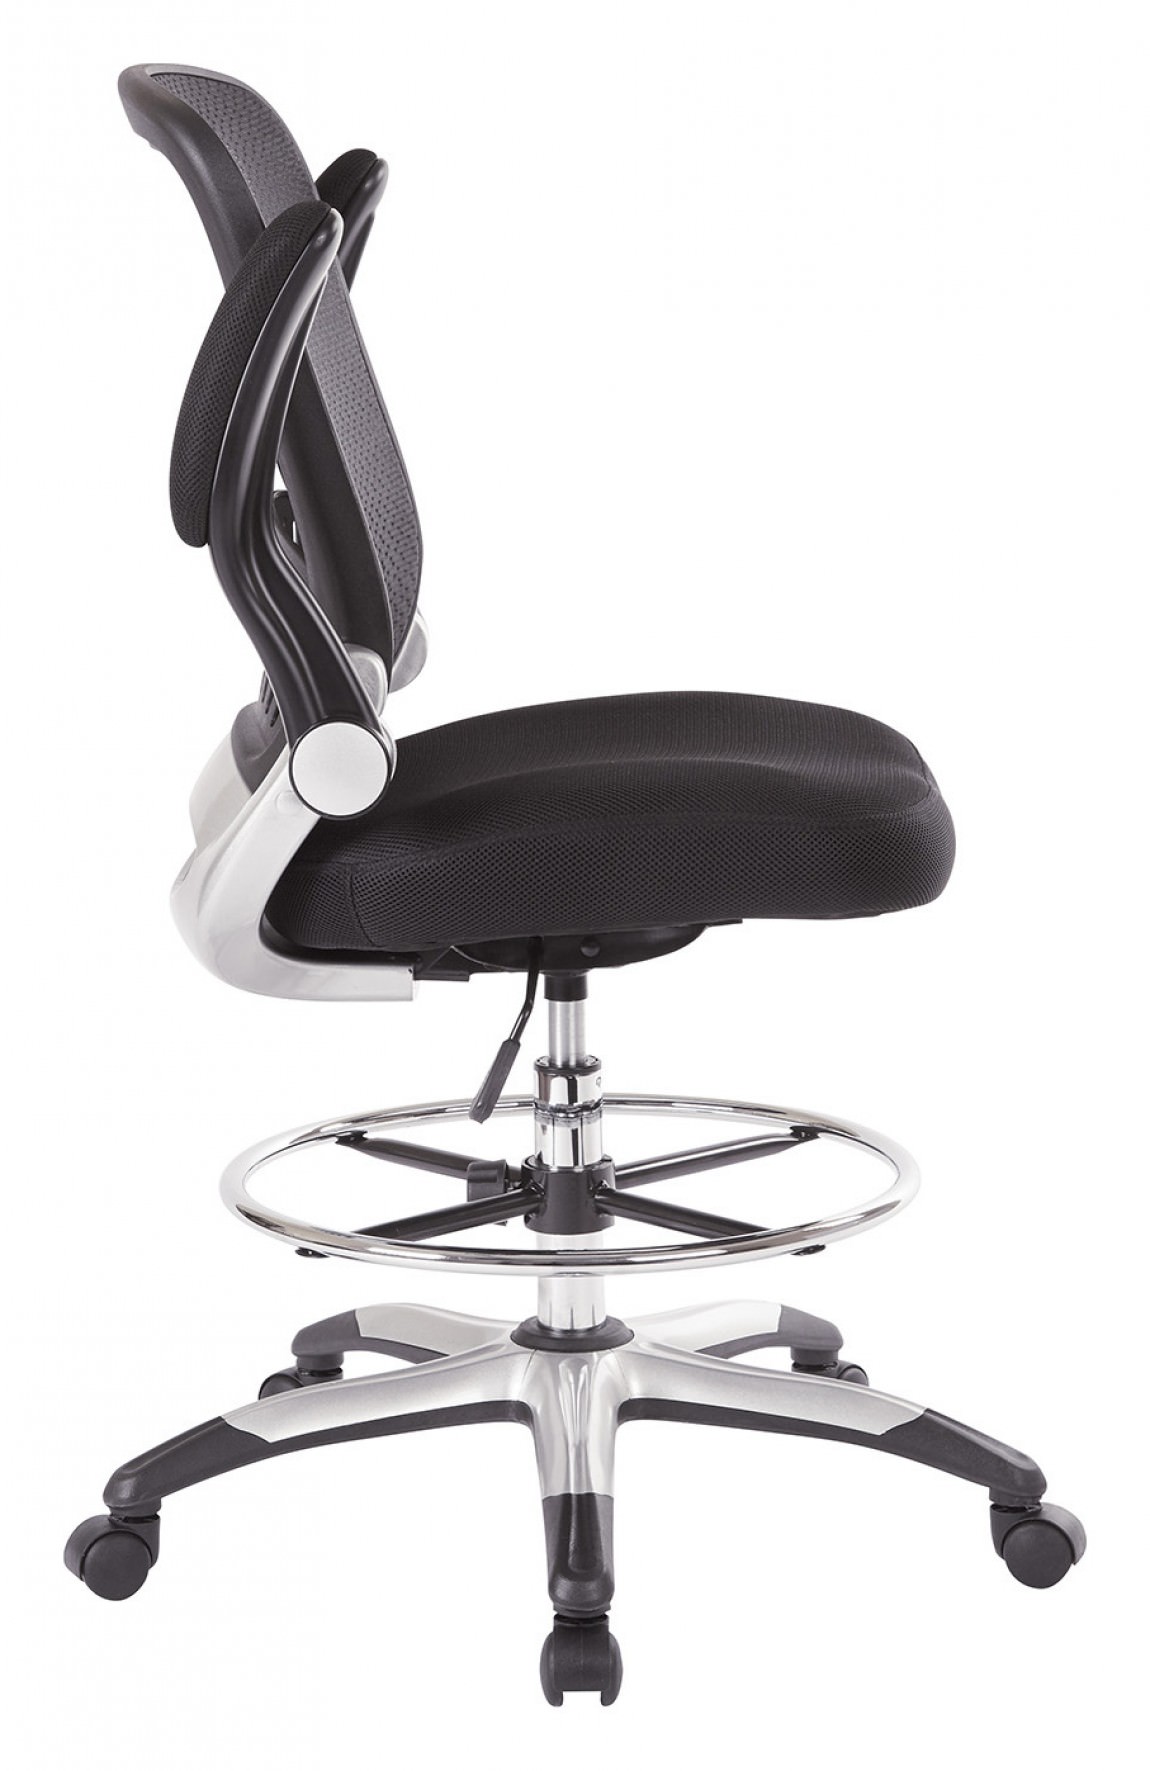 Ergonomic Desk Chair 24.75 x 22.75 x 42.5 - 49.75 : DCY69006-3M